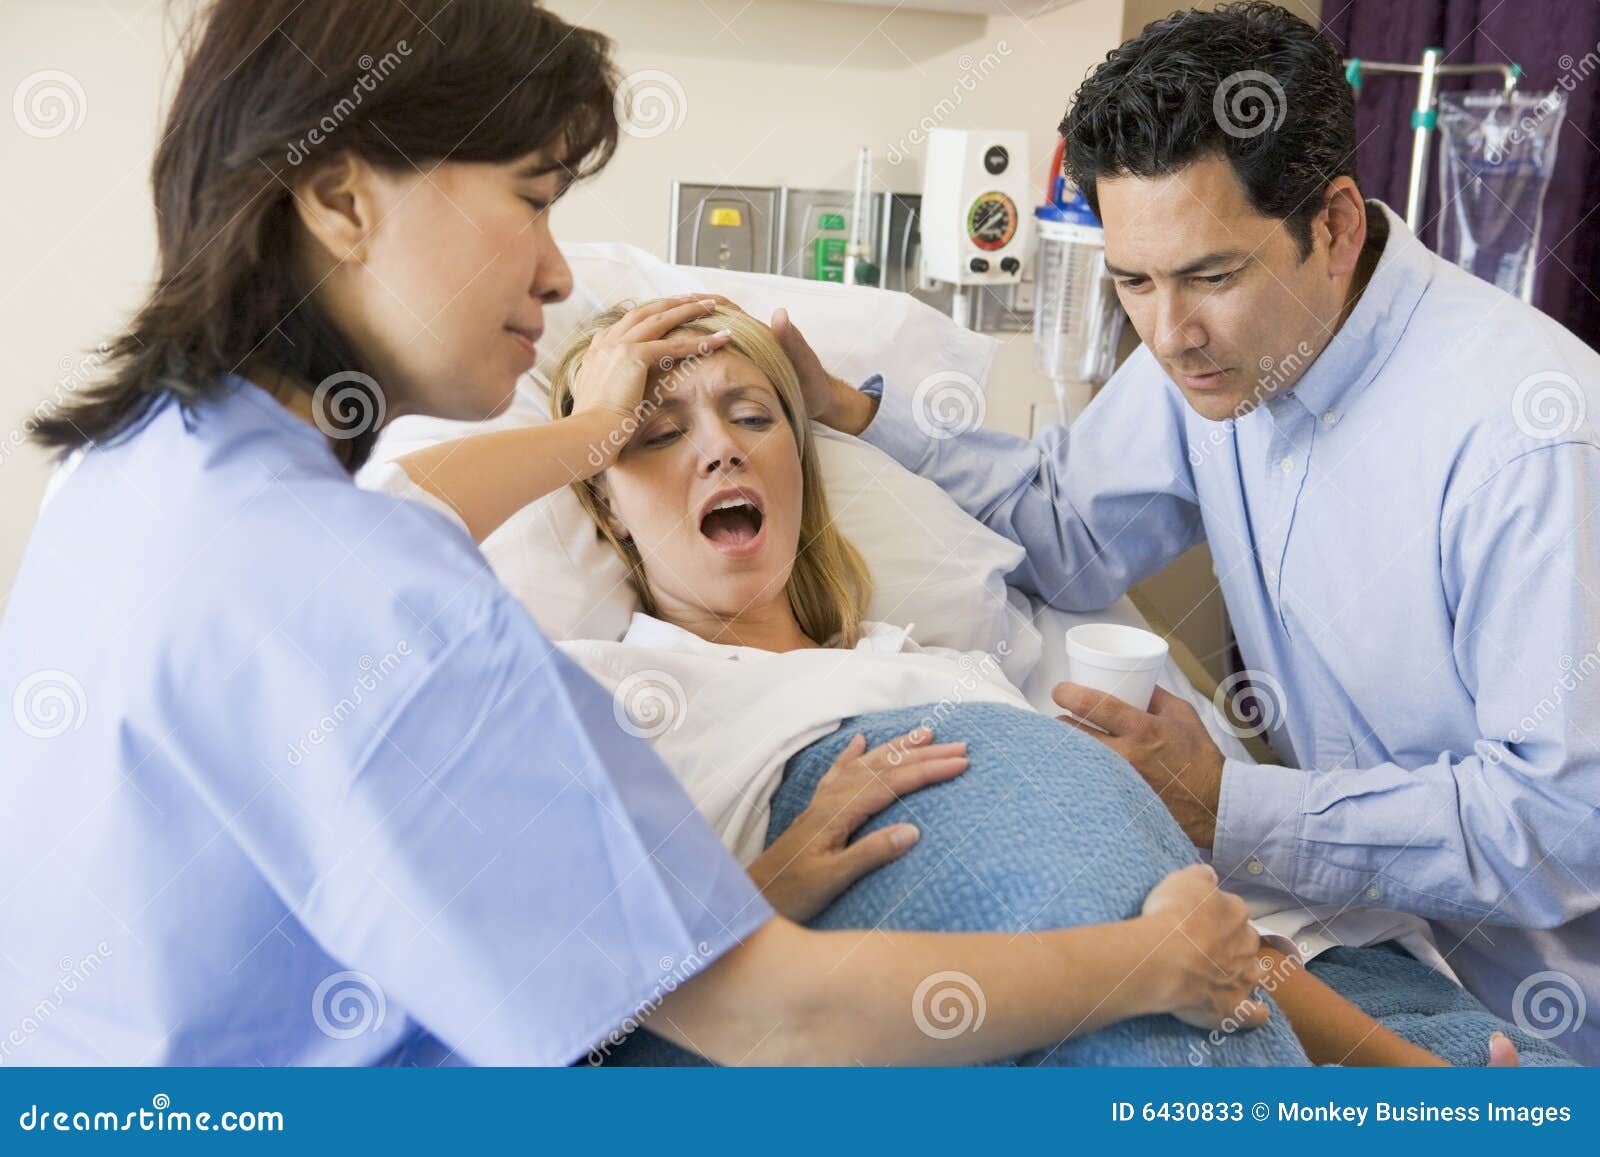 woman giving birth